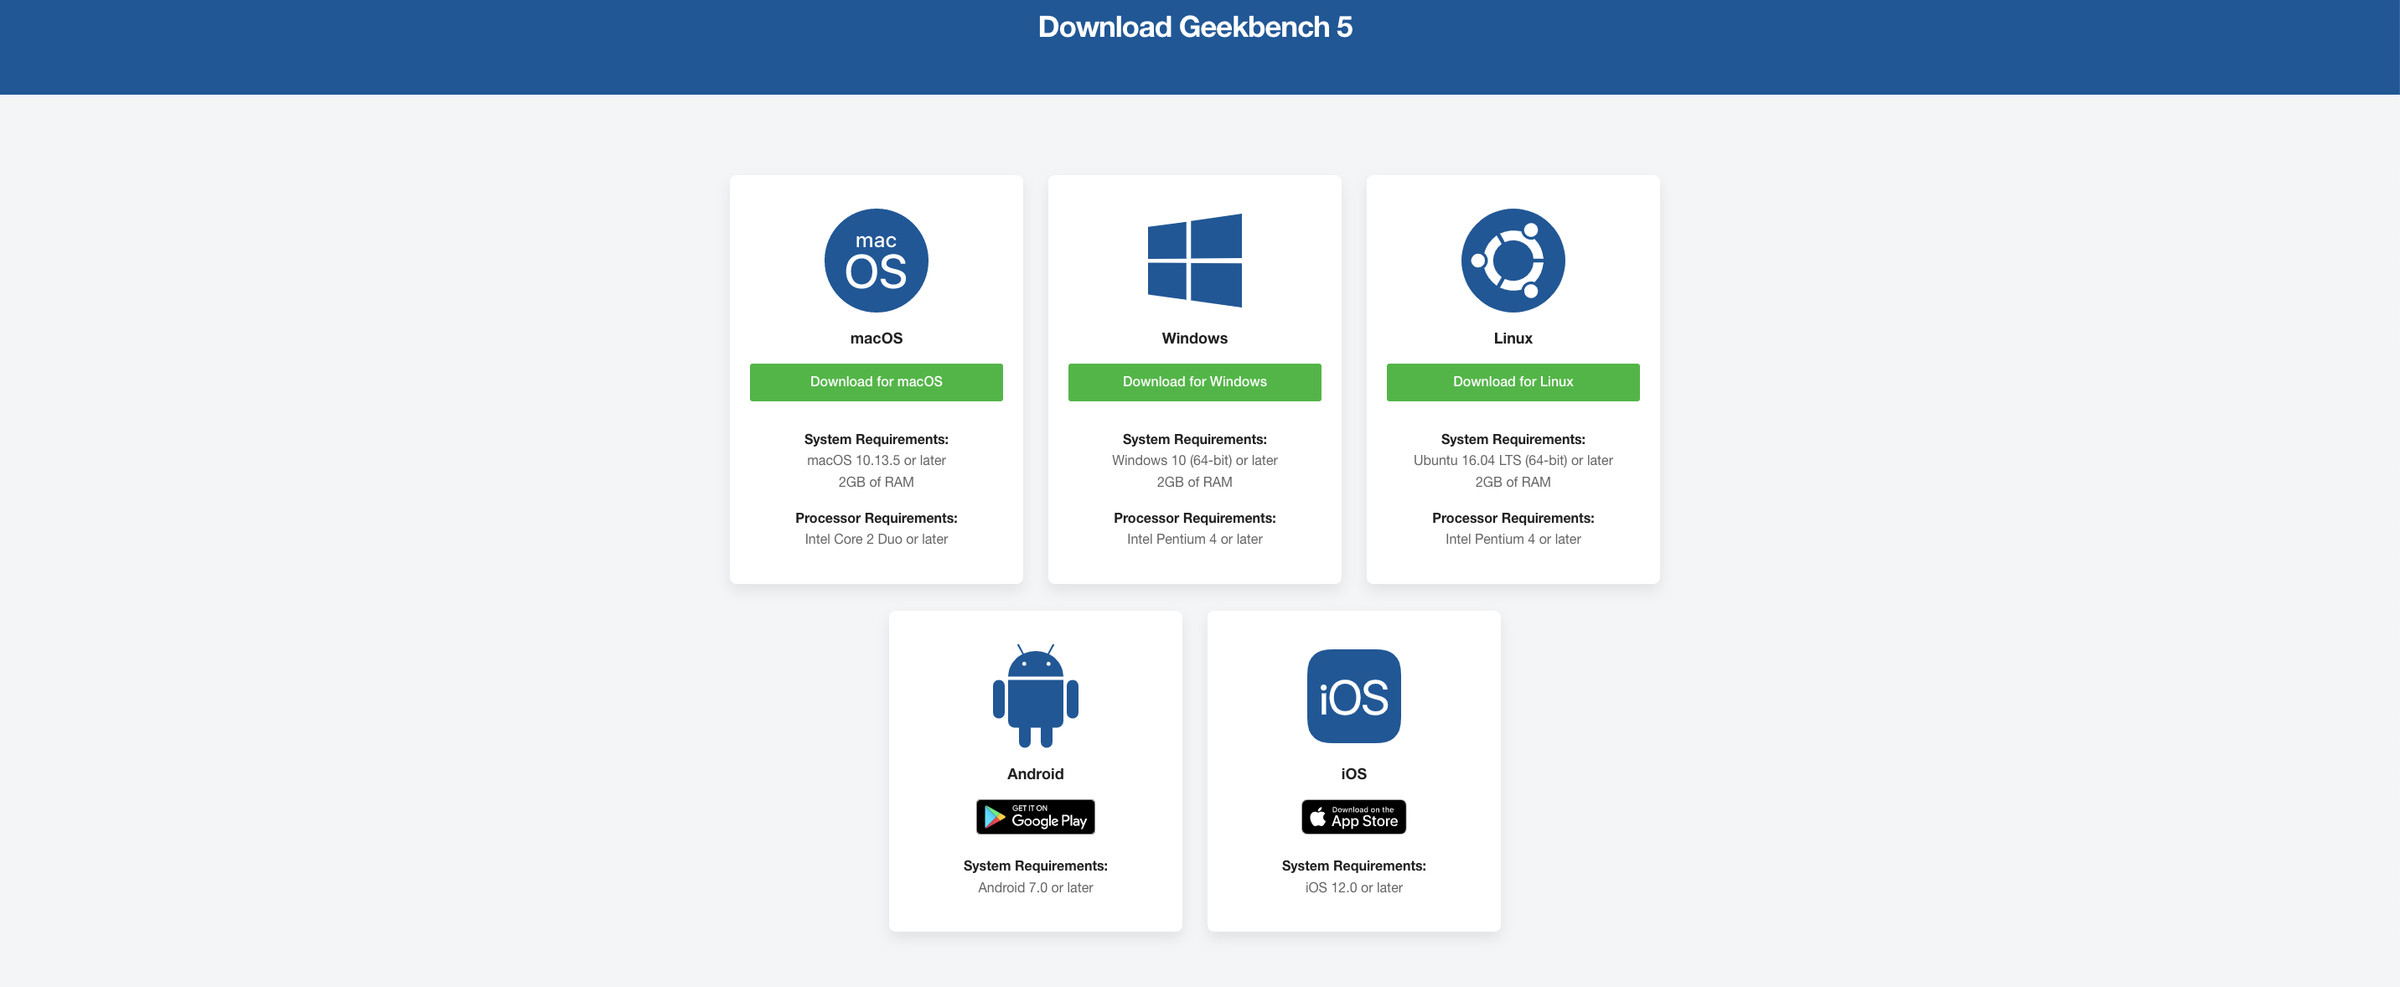 A screenshot of the Geekbench 5 download screen.